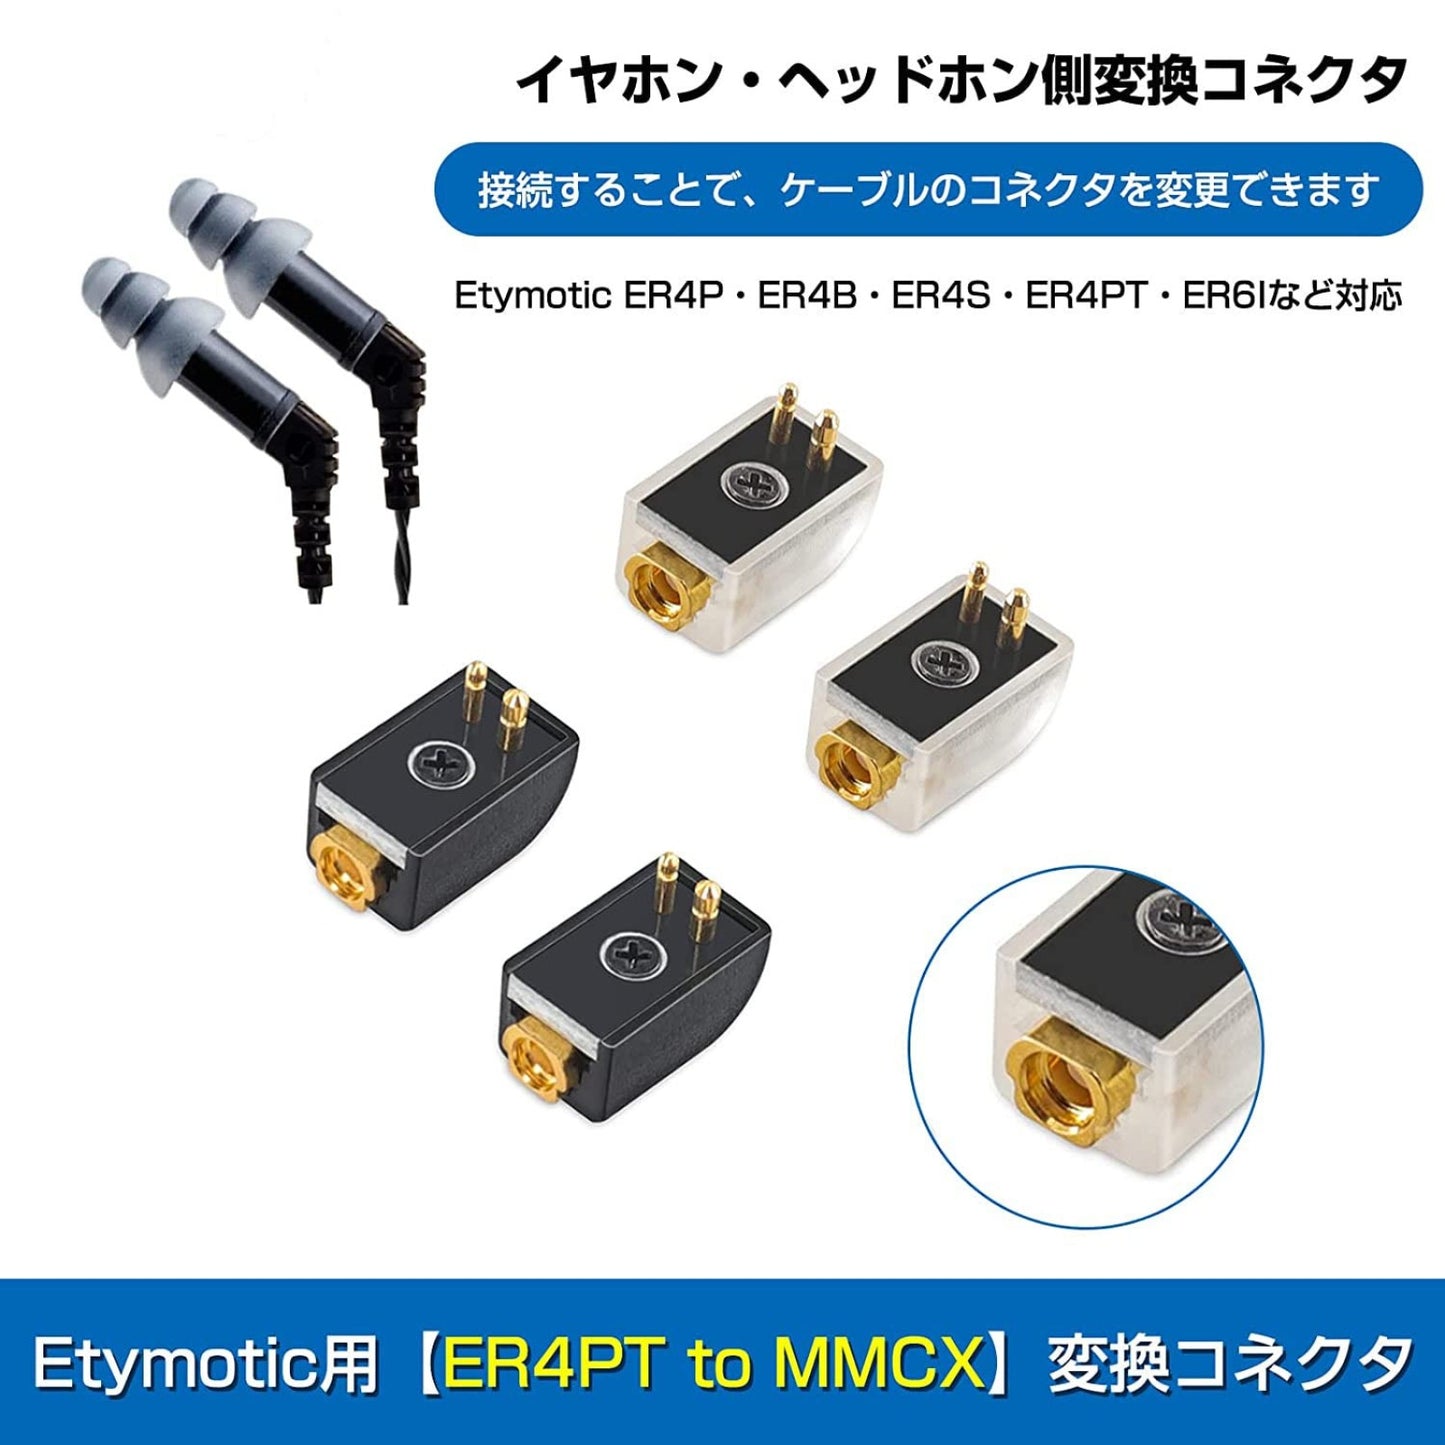 cooyin 4C-ER4P-MMCX 変換コネクター コネクターキット Etymotic用 ER4P用（オス） to MMCXコネクタ（メス） ER4P・ER4B・ER4S・ER4PT・ER6Iなど適合 2個セット ブラック